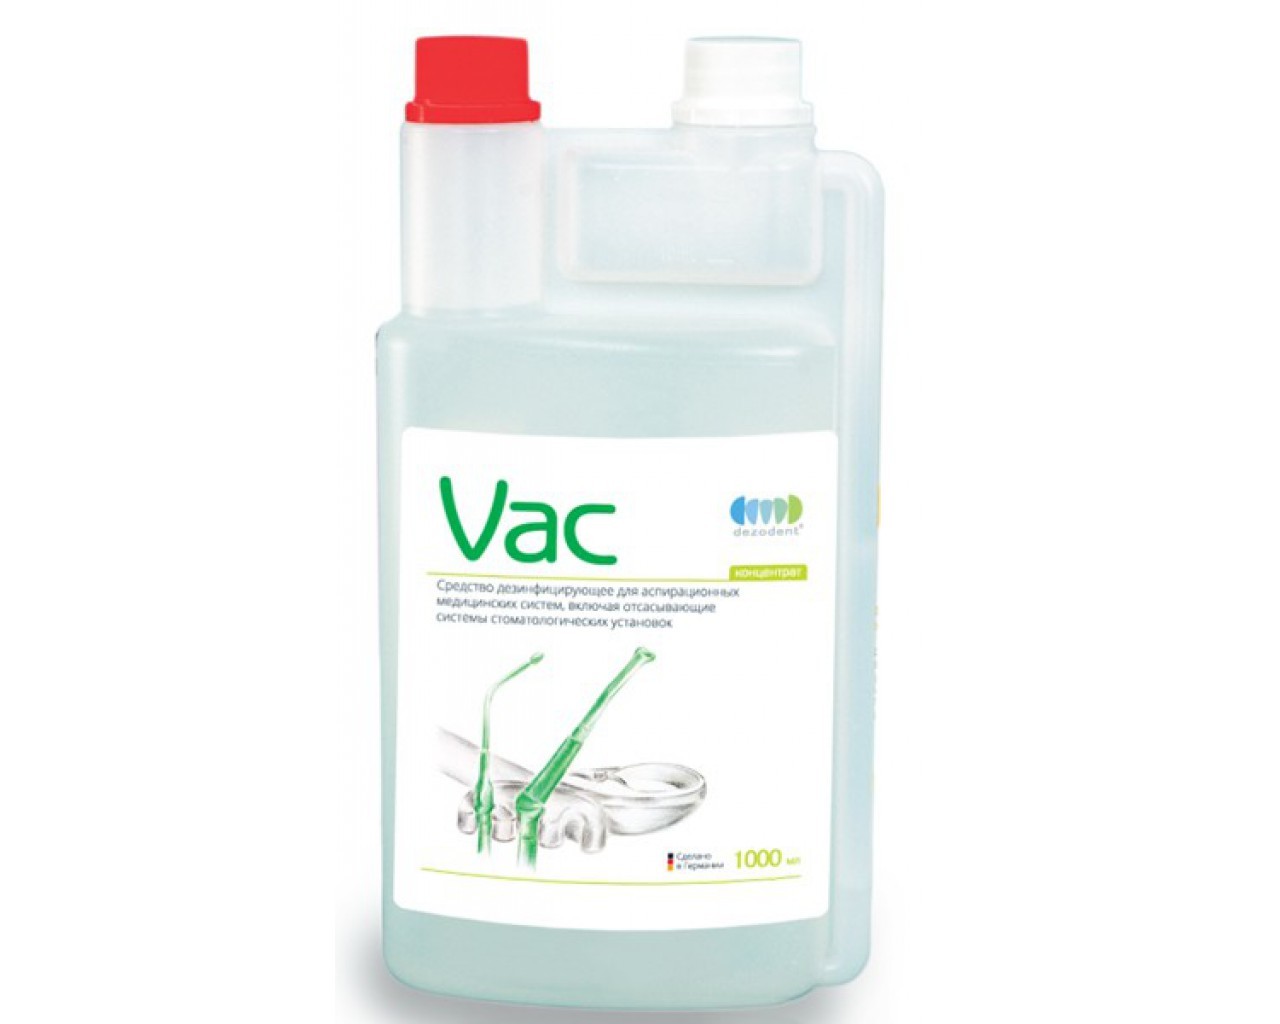 Dezodent VAC дезинфицирующее средство (1л) (Laboratorium Dr.H.D.DEPPE)